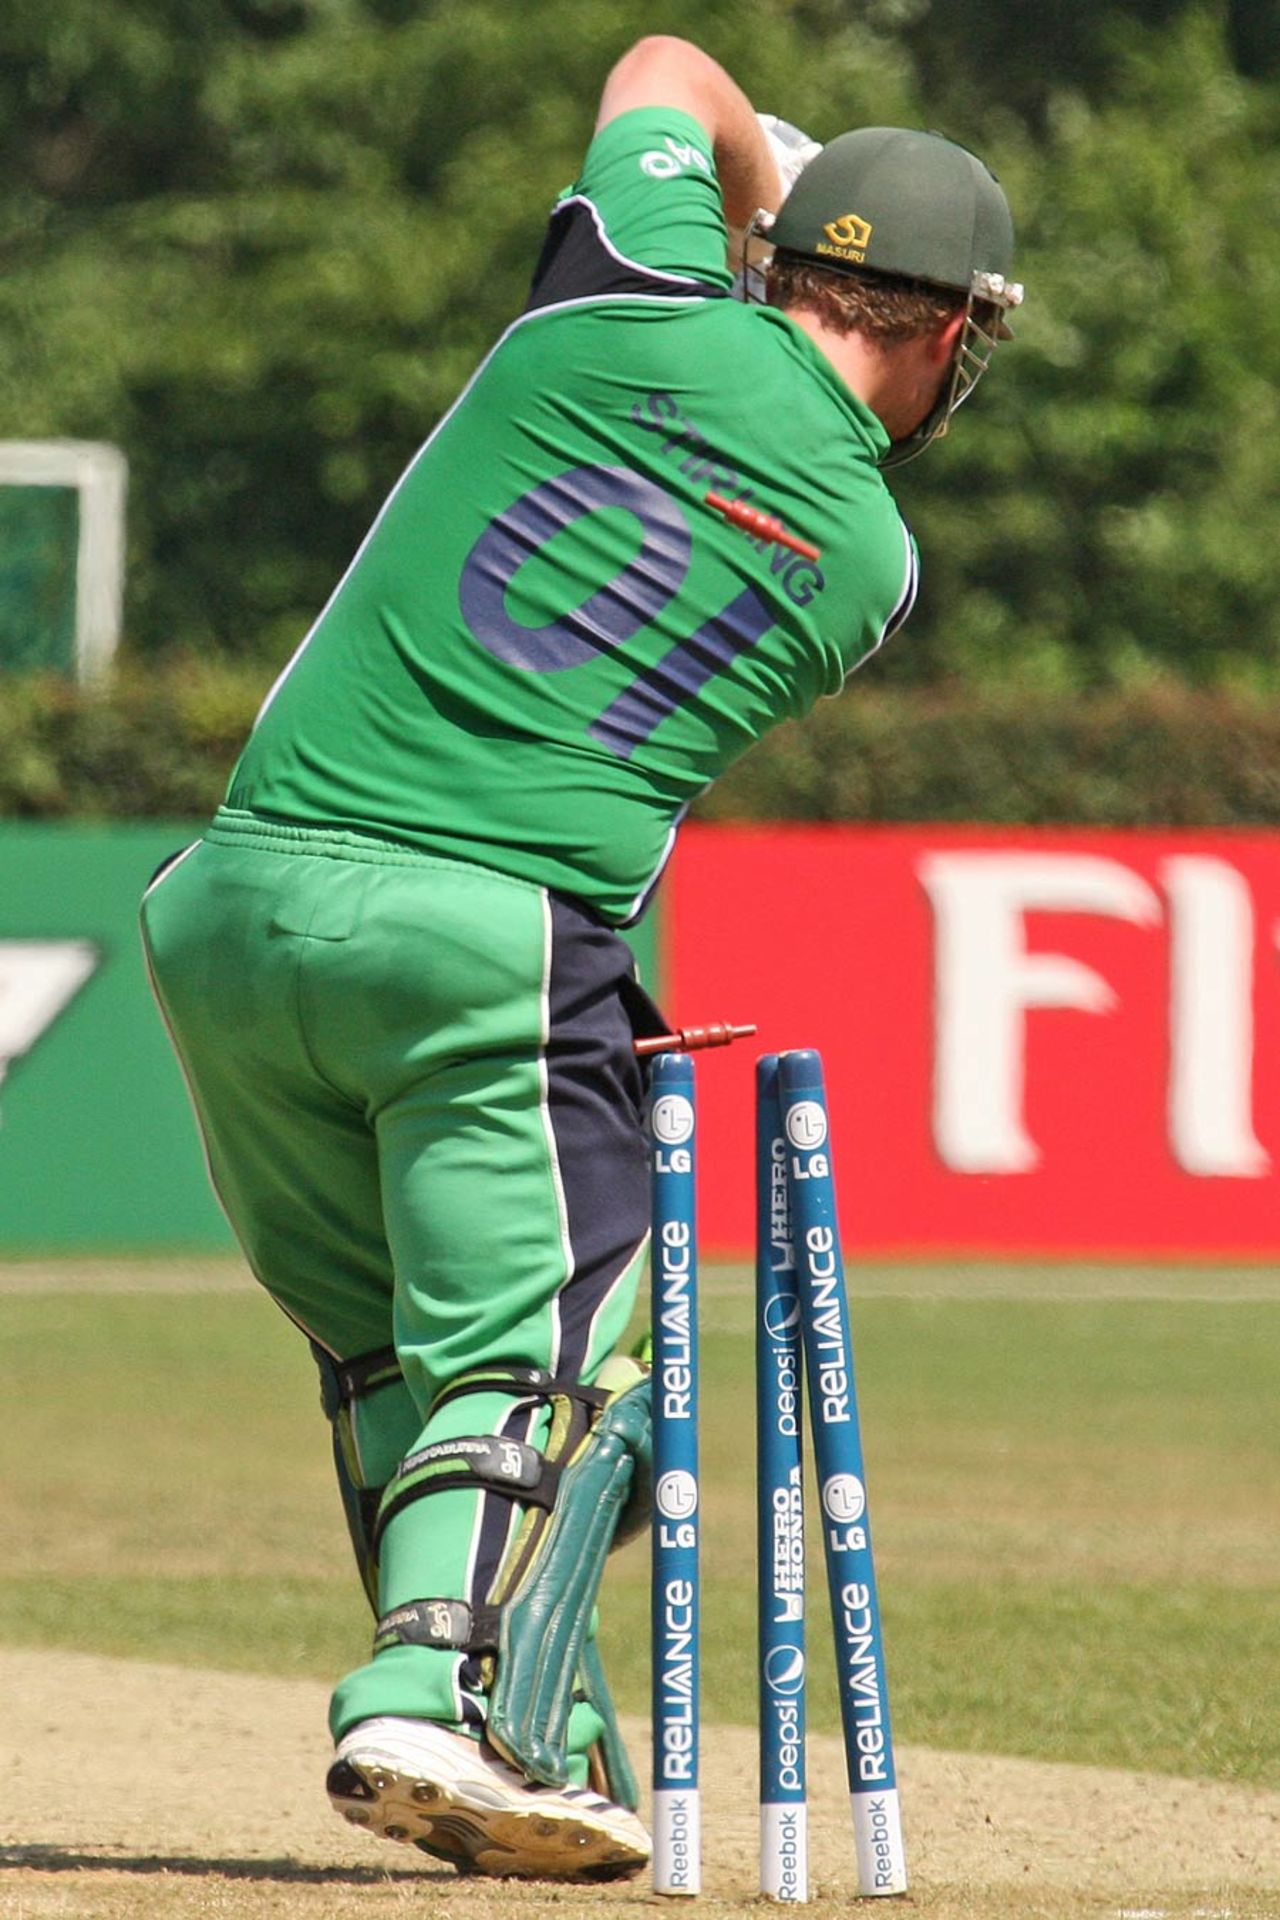 Ireland's Paul Stirling is bowled, Netherlands v Ireland, ICC WCL Division 1, Amstelveen, July 9, 2010 